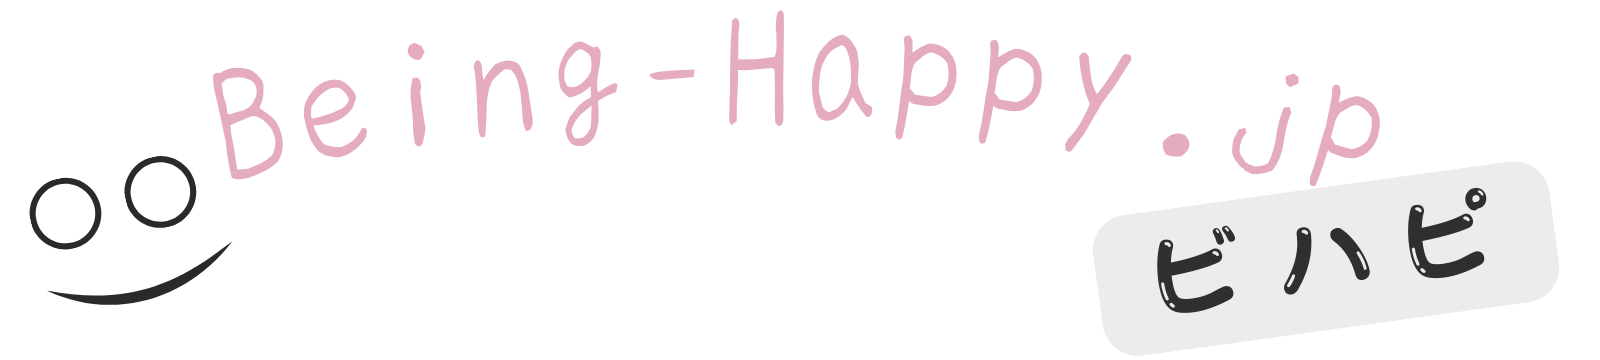 Being-Happy ビハピ